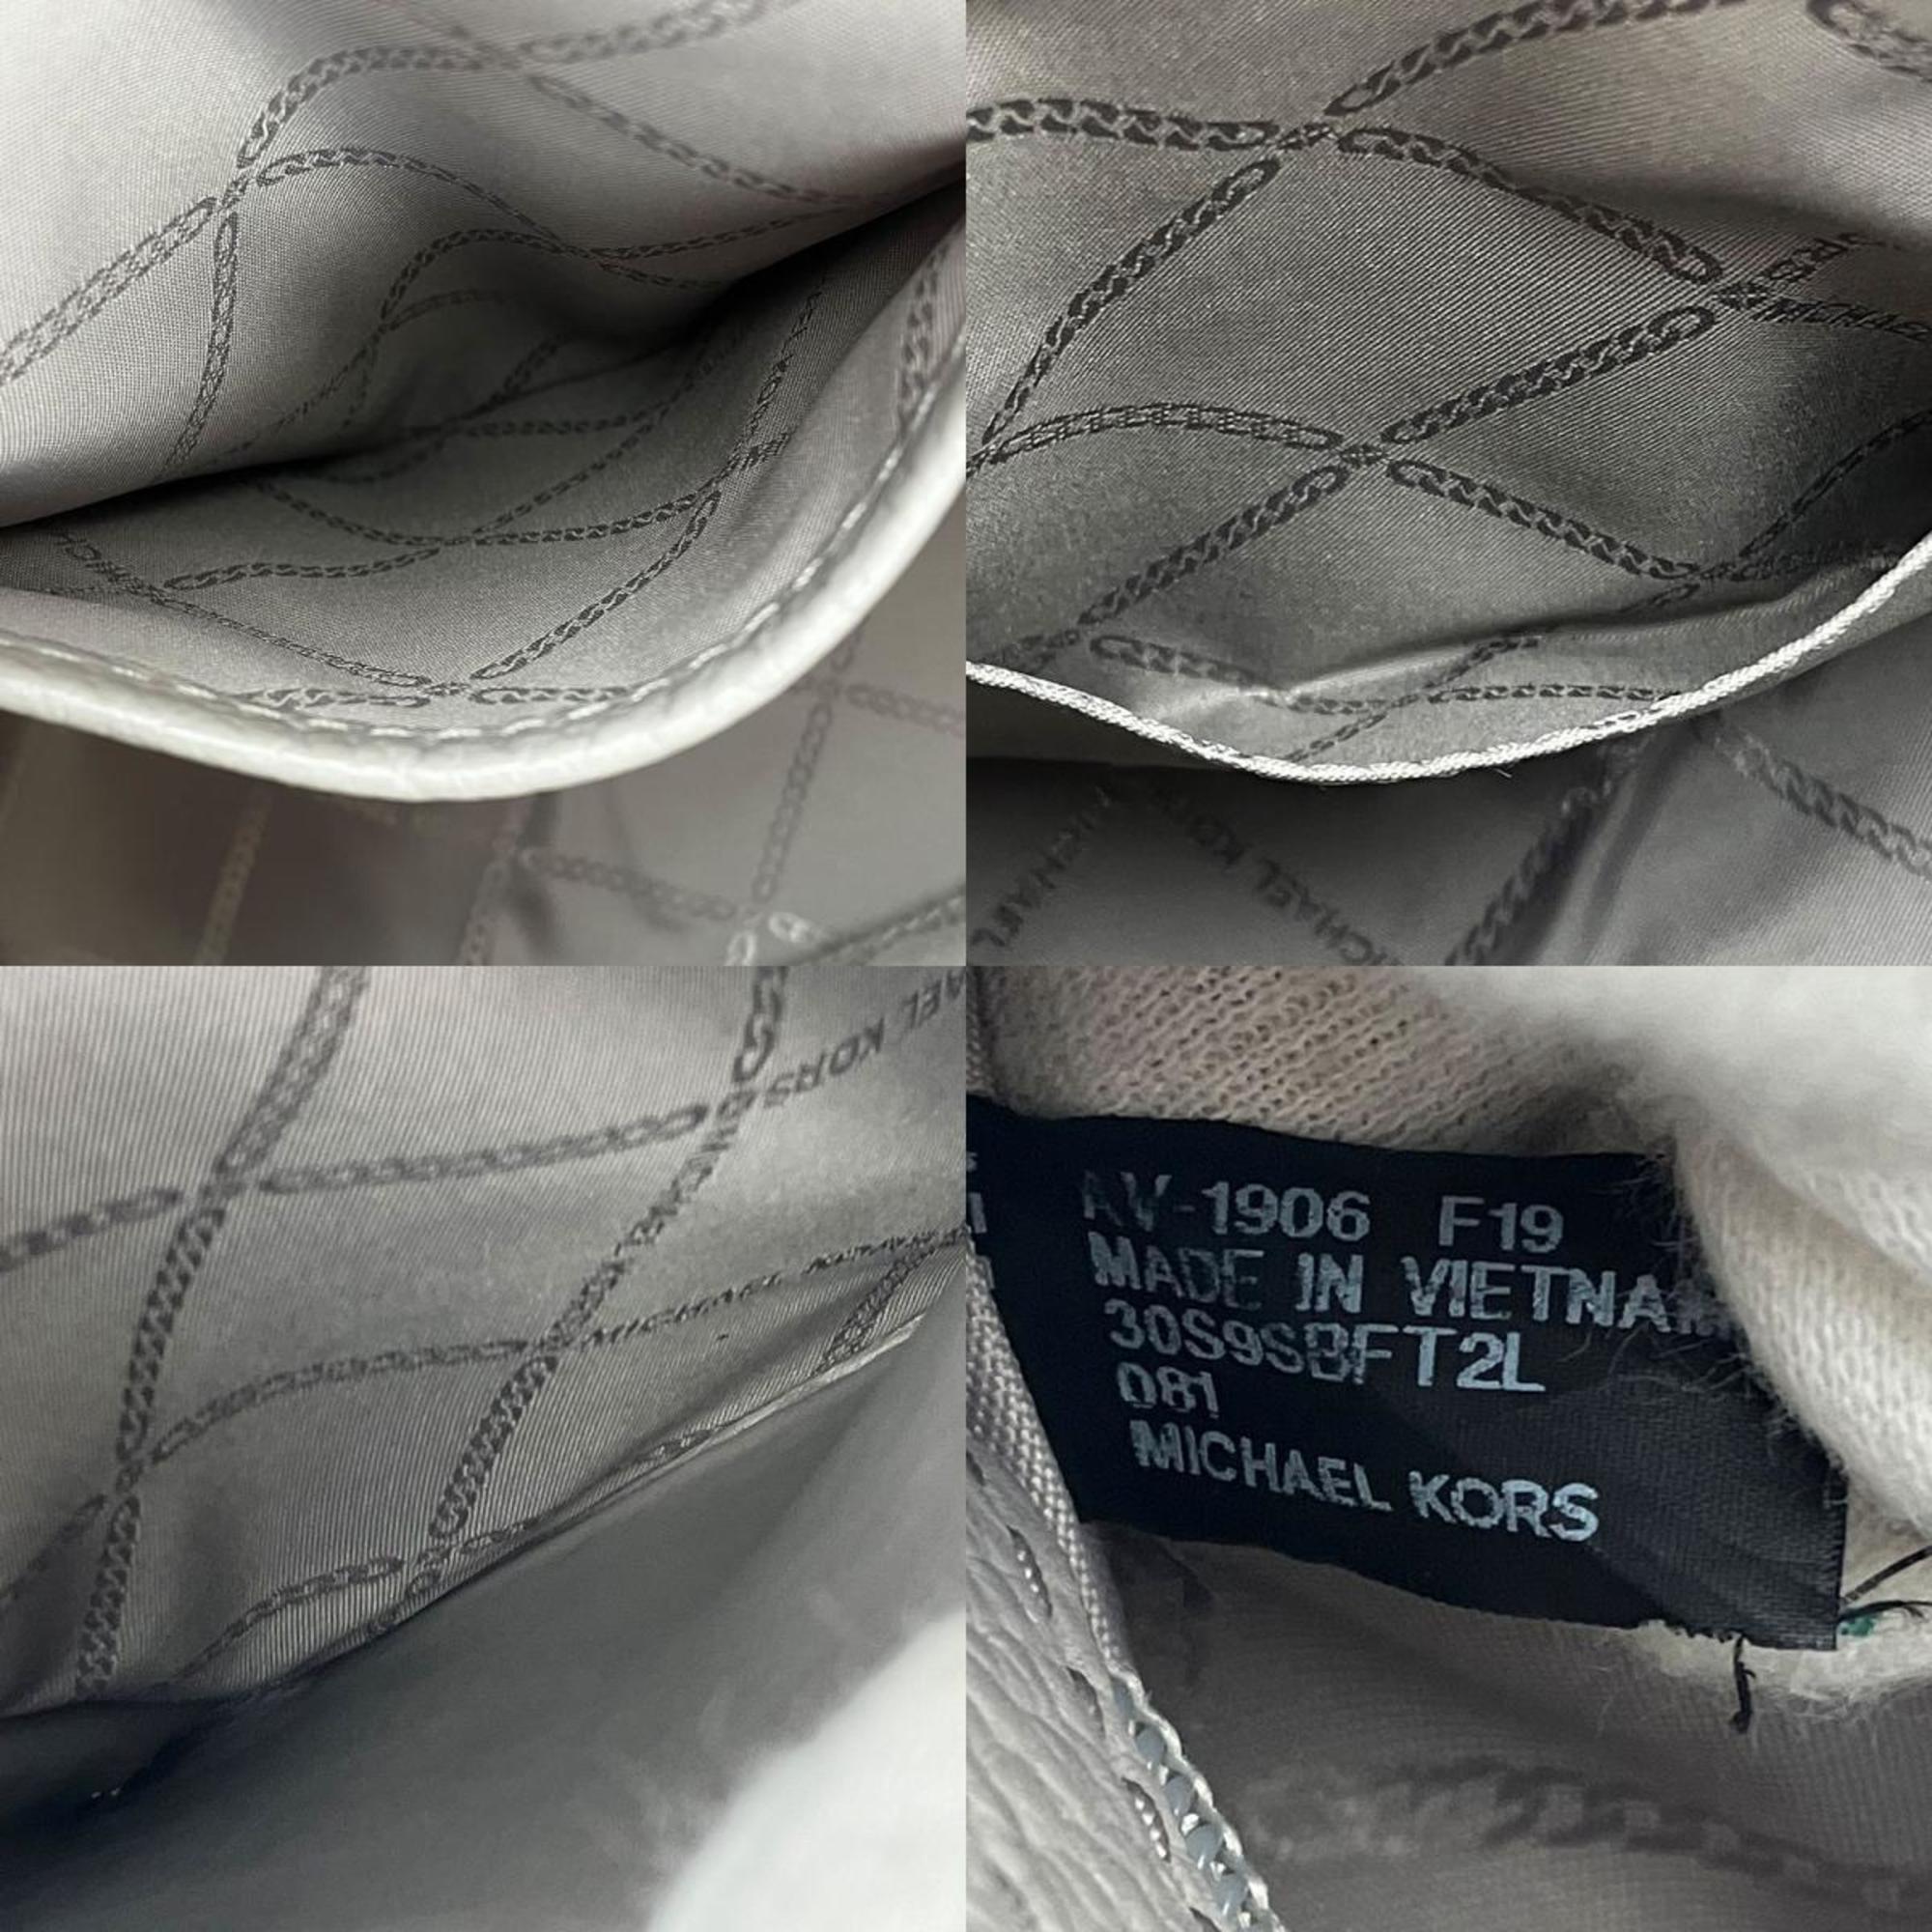 Michael Kors Tote Bag 30S9SBFT2L Leather Gray Beige Women's